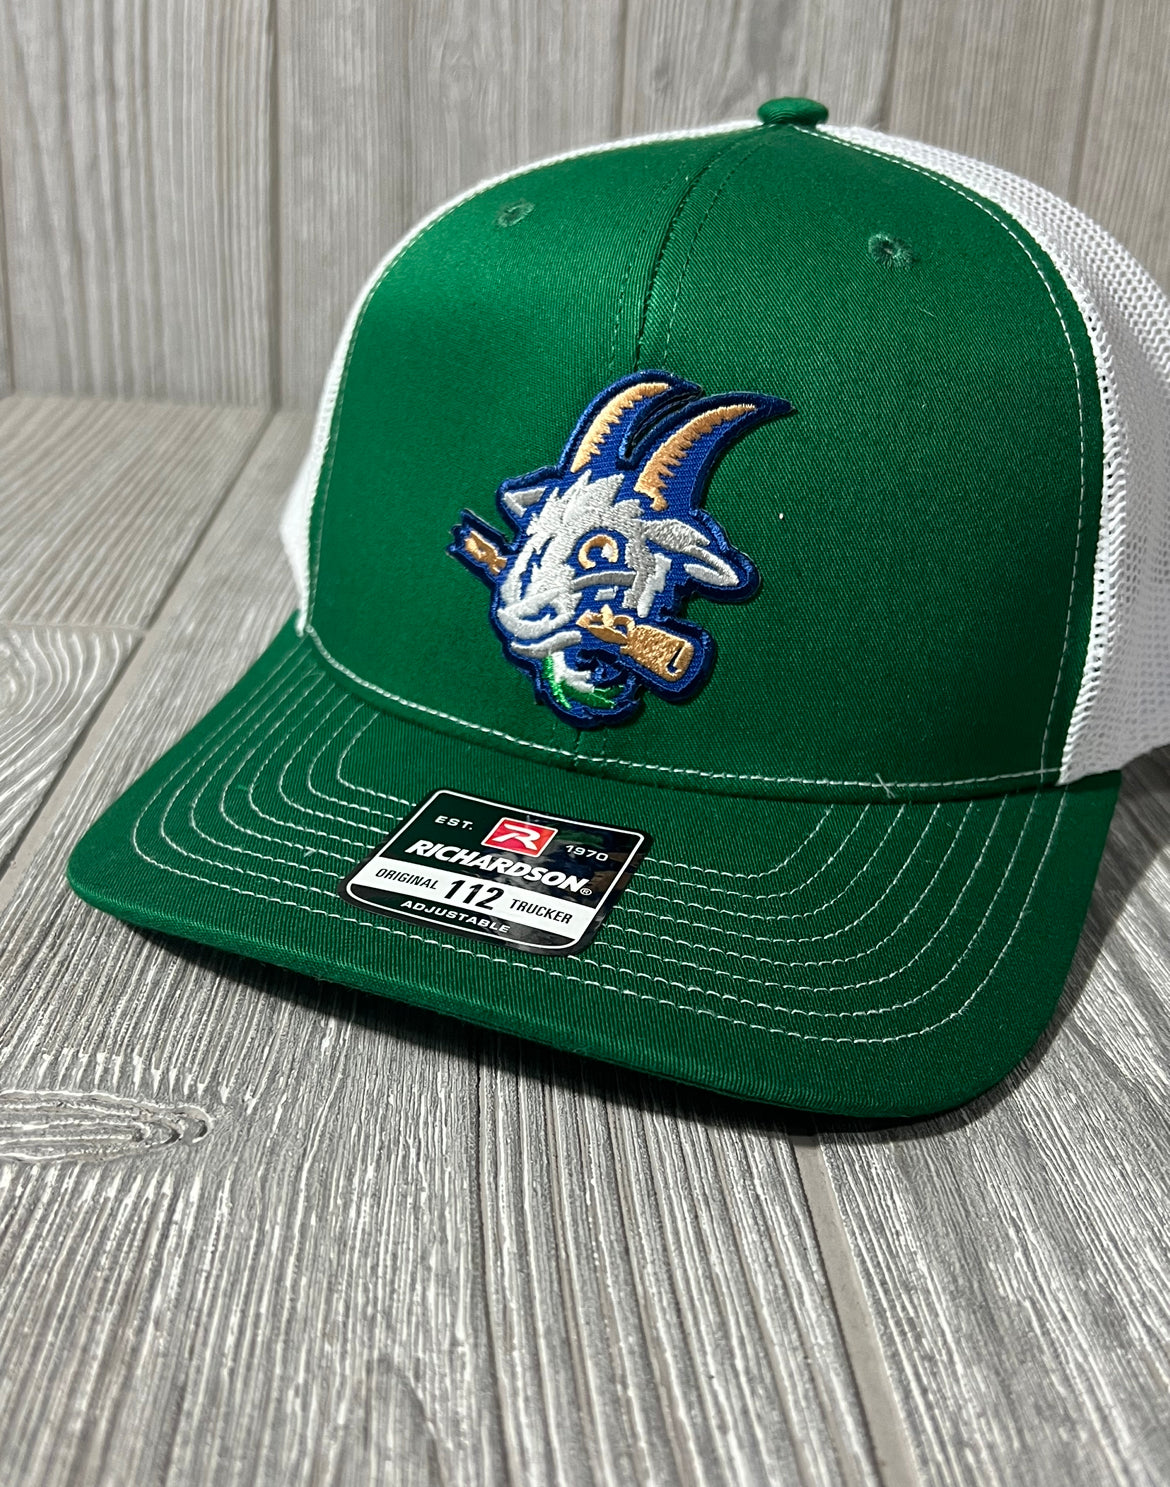 Yard Goats Little League Baseball Hat